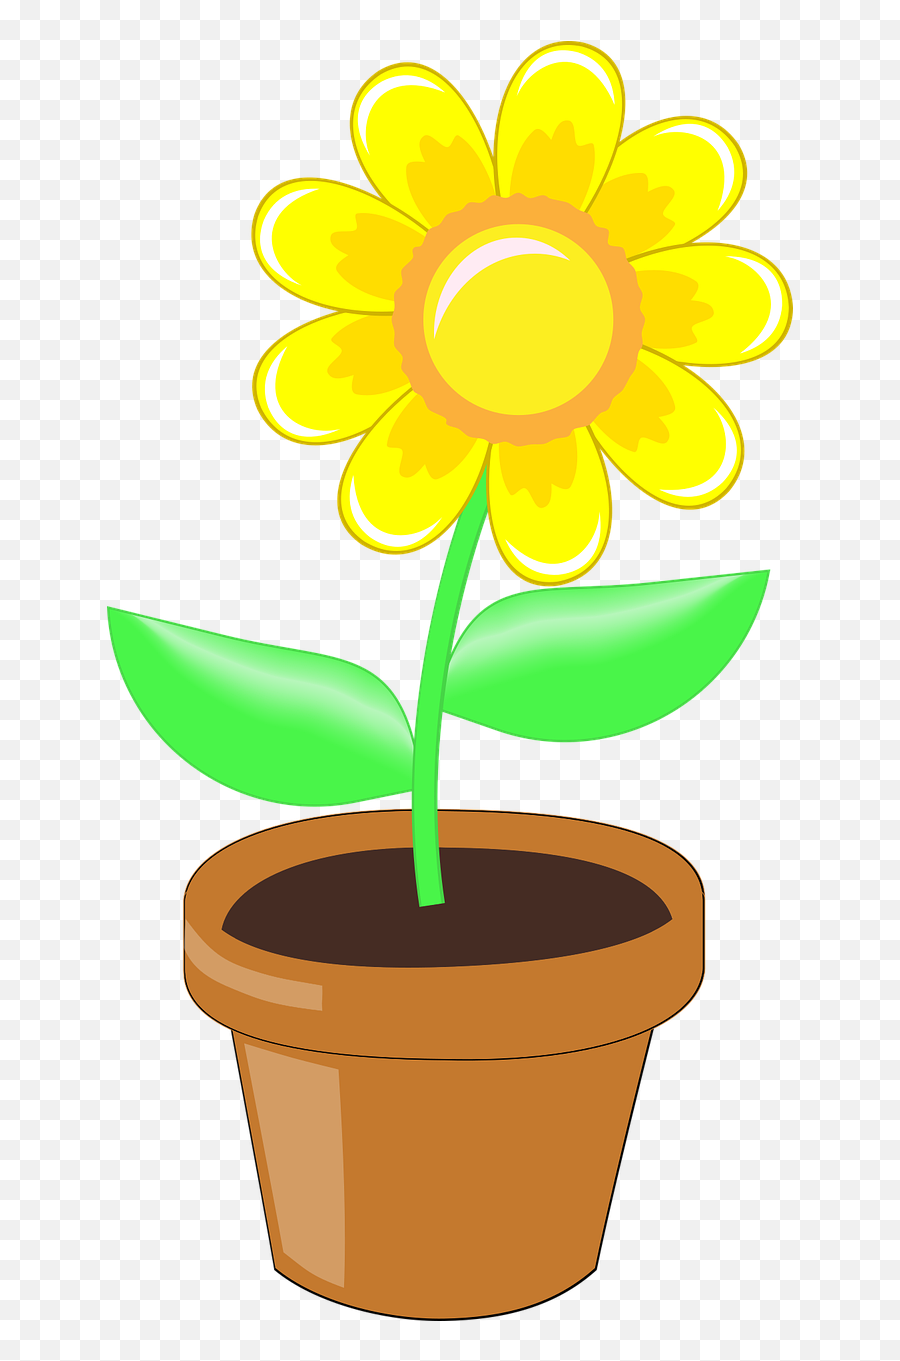 Flower Yellow Nature - Free Vector Graphic On Pixabay Gambar Pot Dan Bunga Png,Green And Yellow Flower Logo